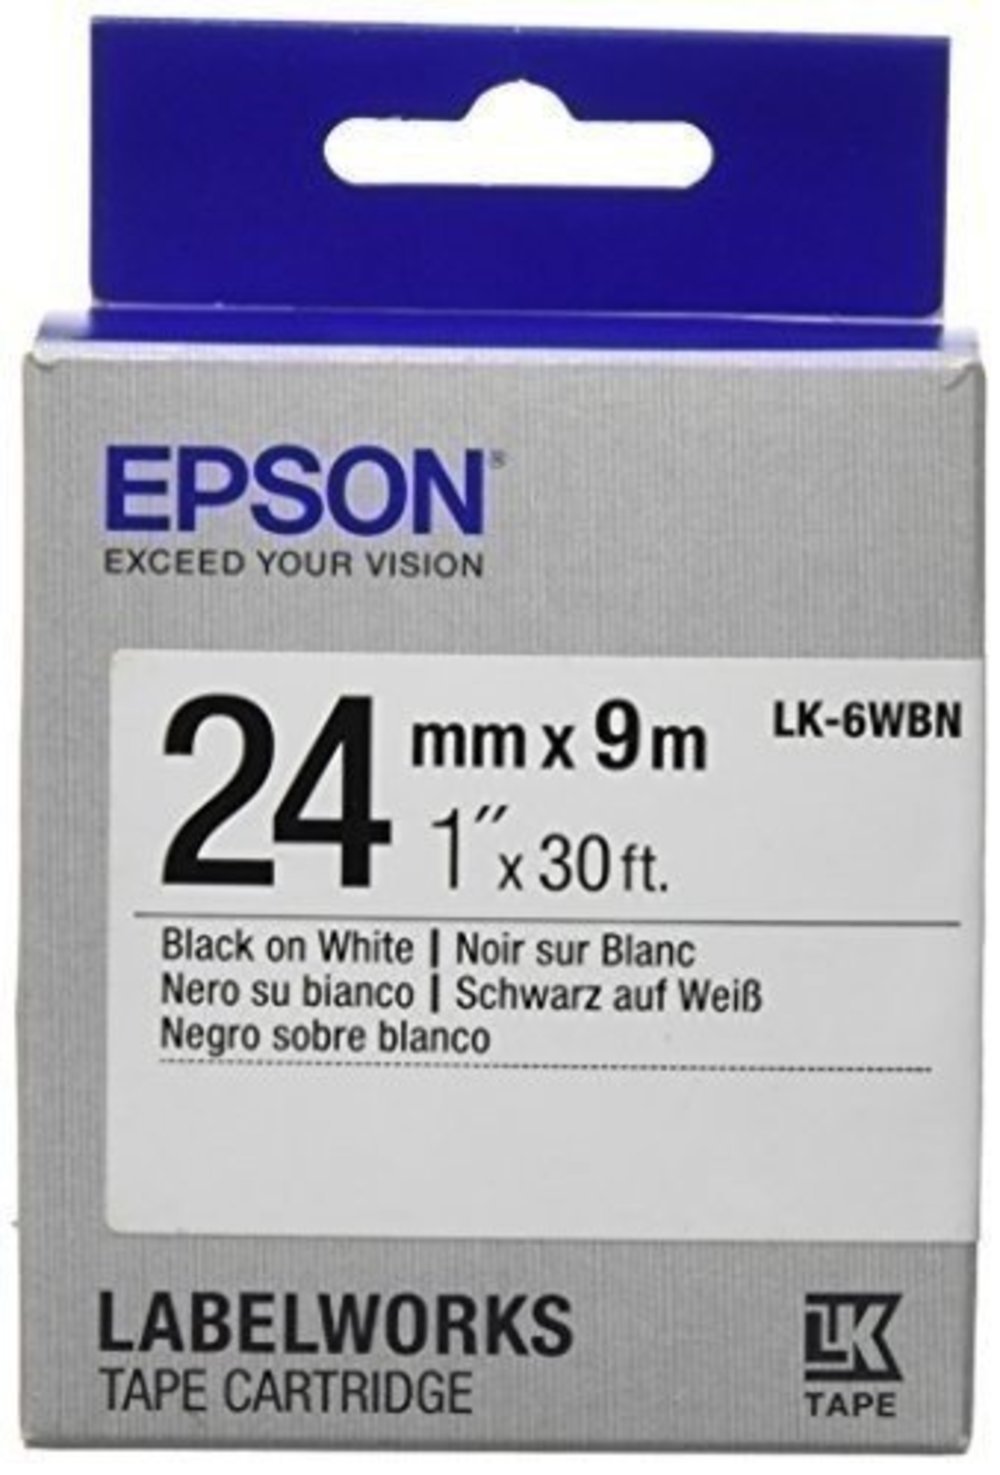 epson ribbon lk-6wbn standard - black on weiss - 24mmx9m